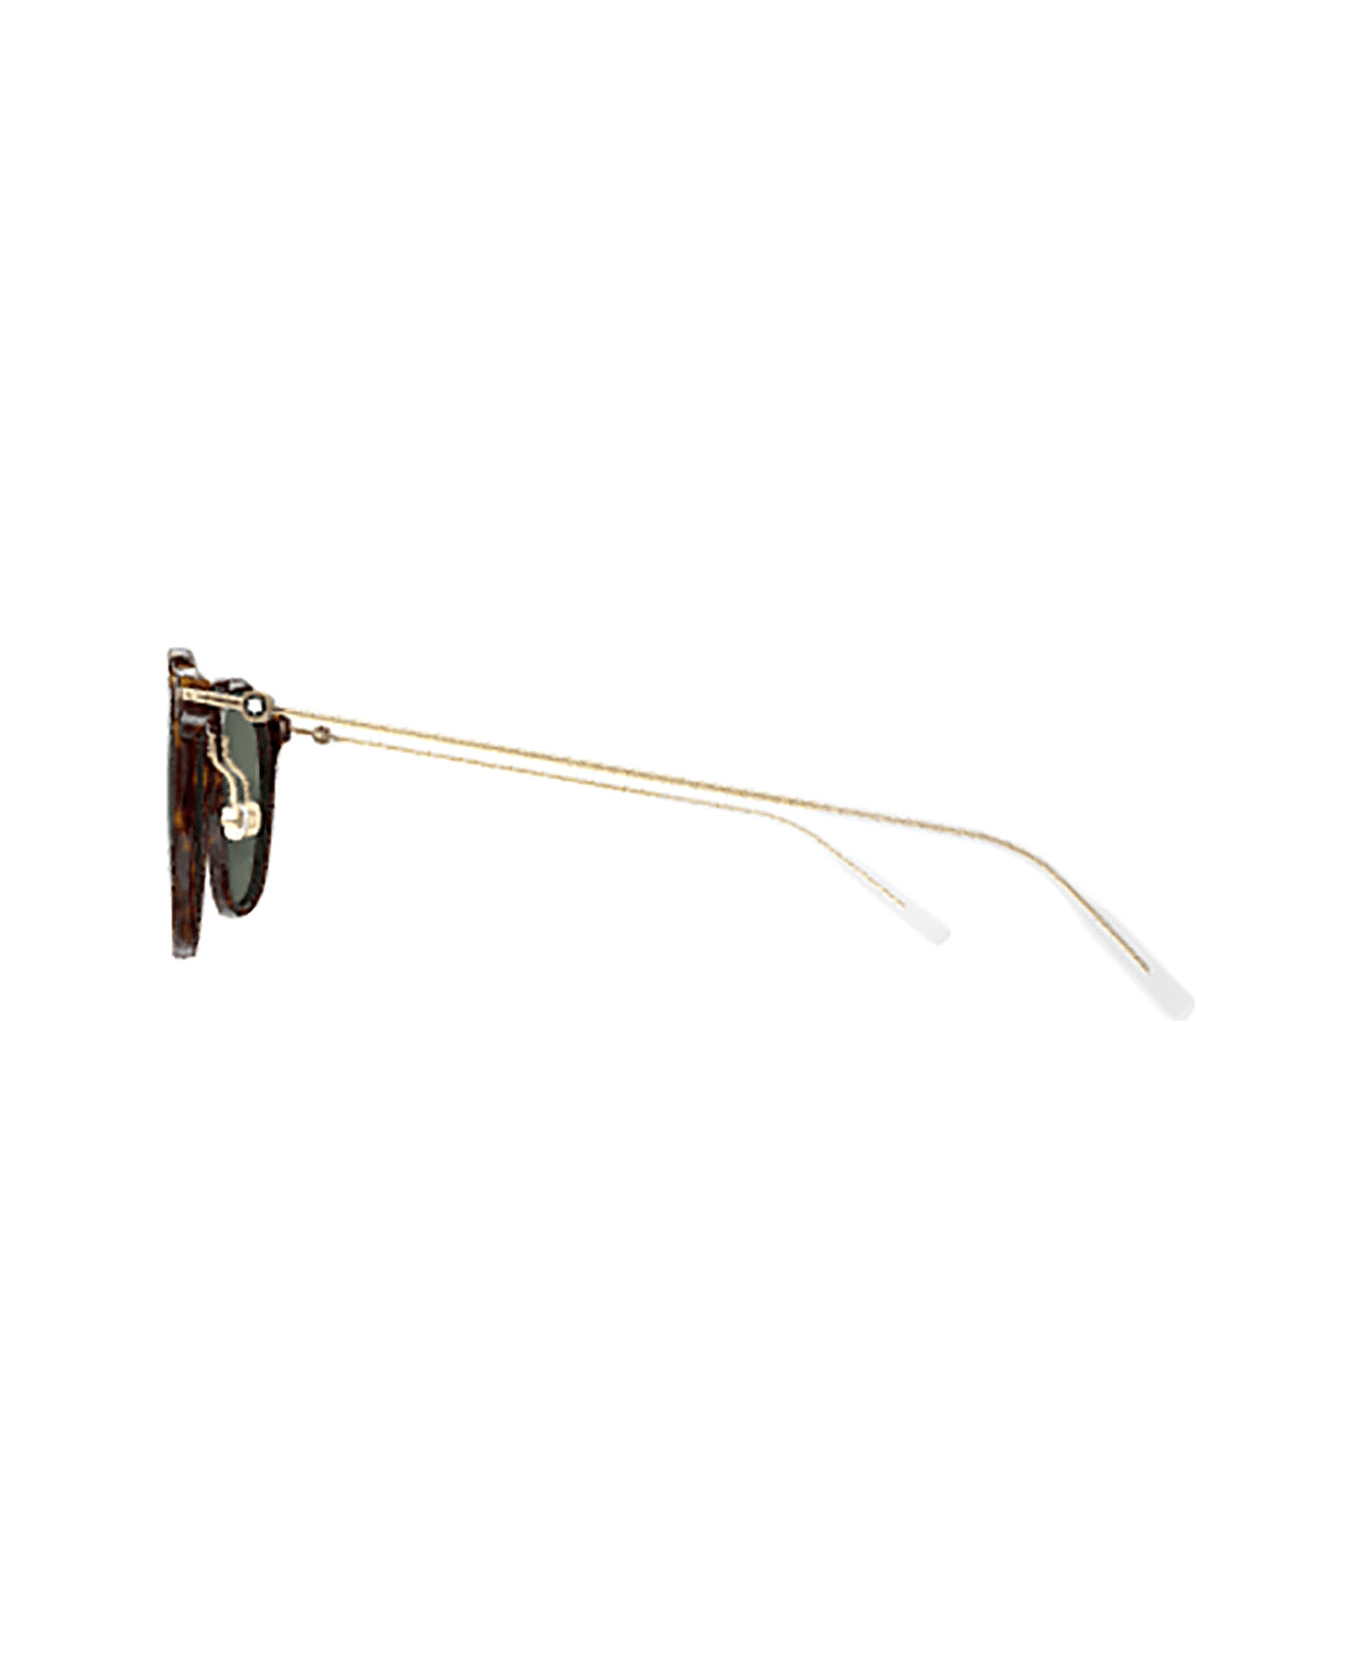 Montblanc MB0098S Sunglasses - Havana Gold Green